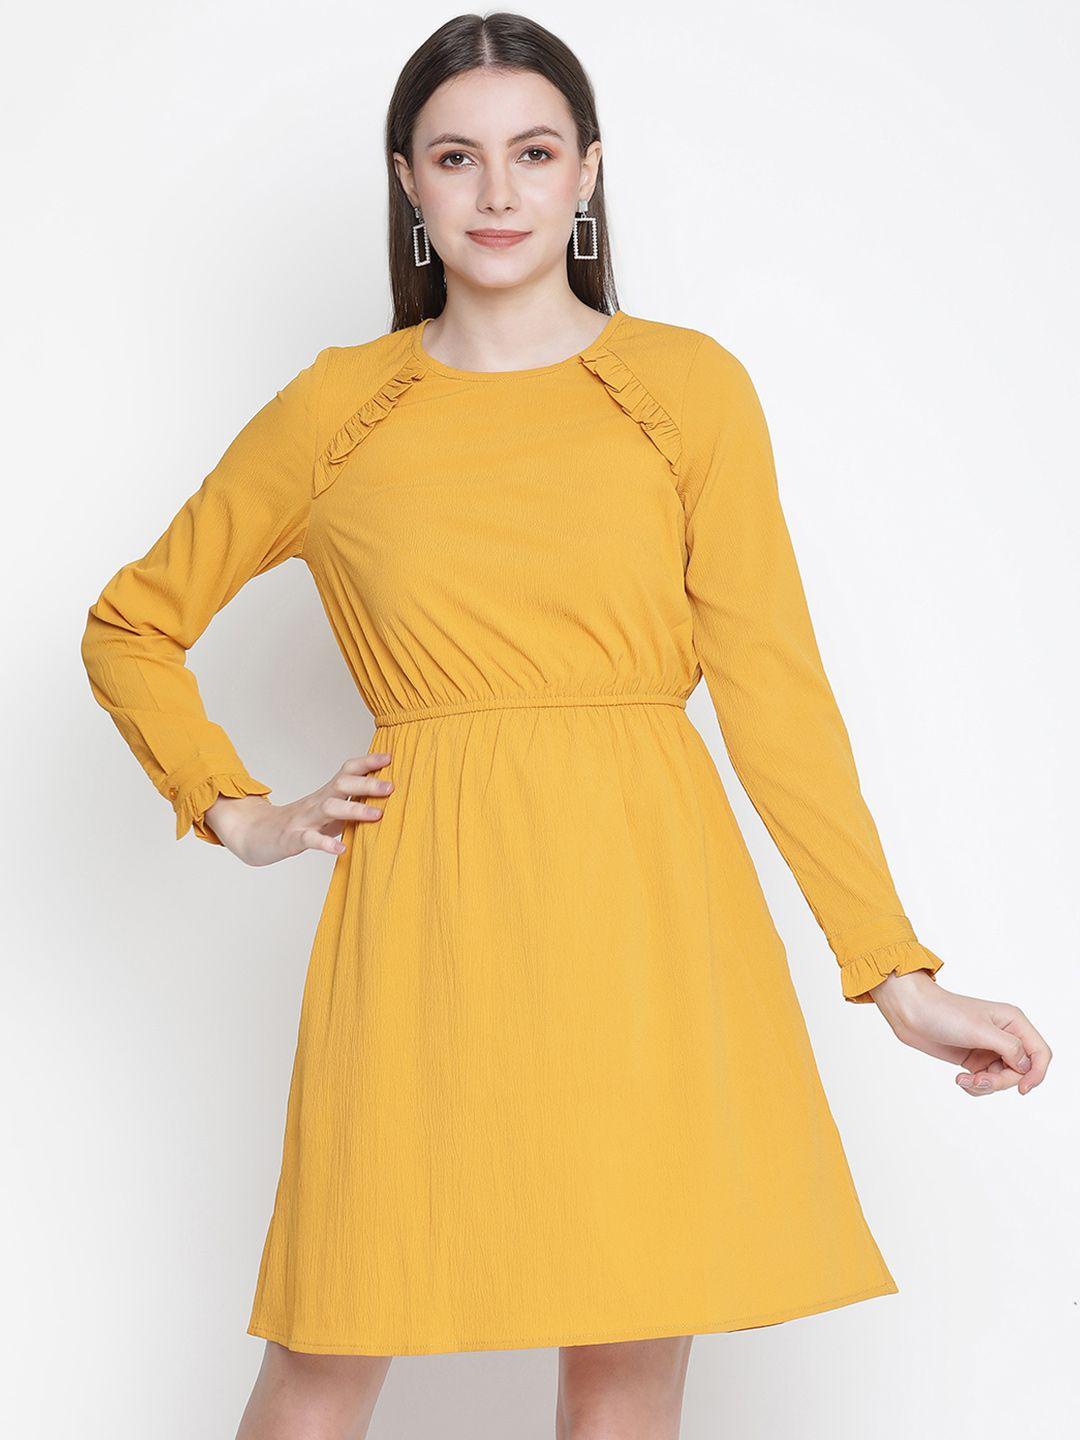 oxolloxo-mustard-yellow-satin-dress